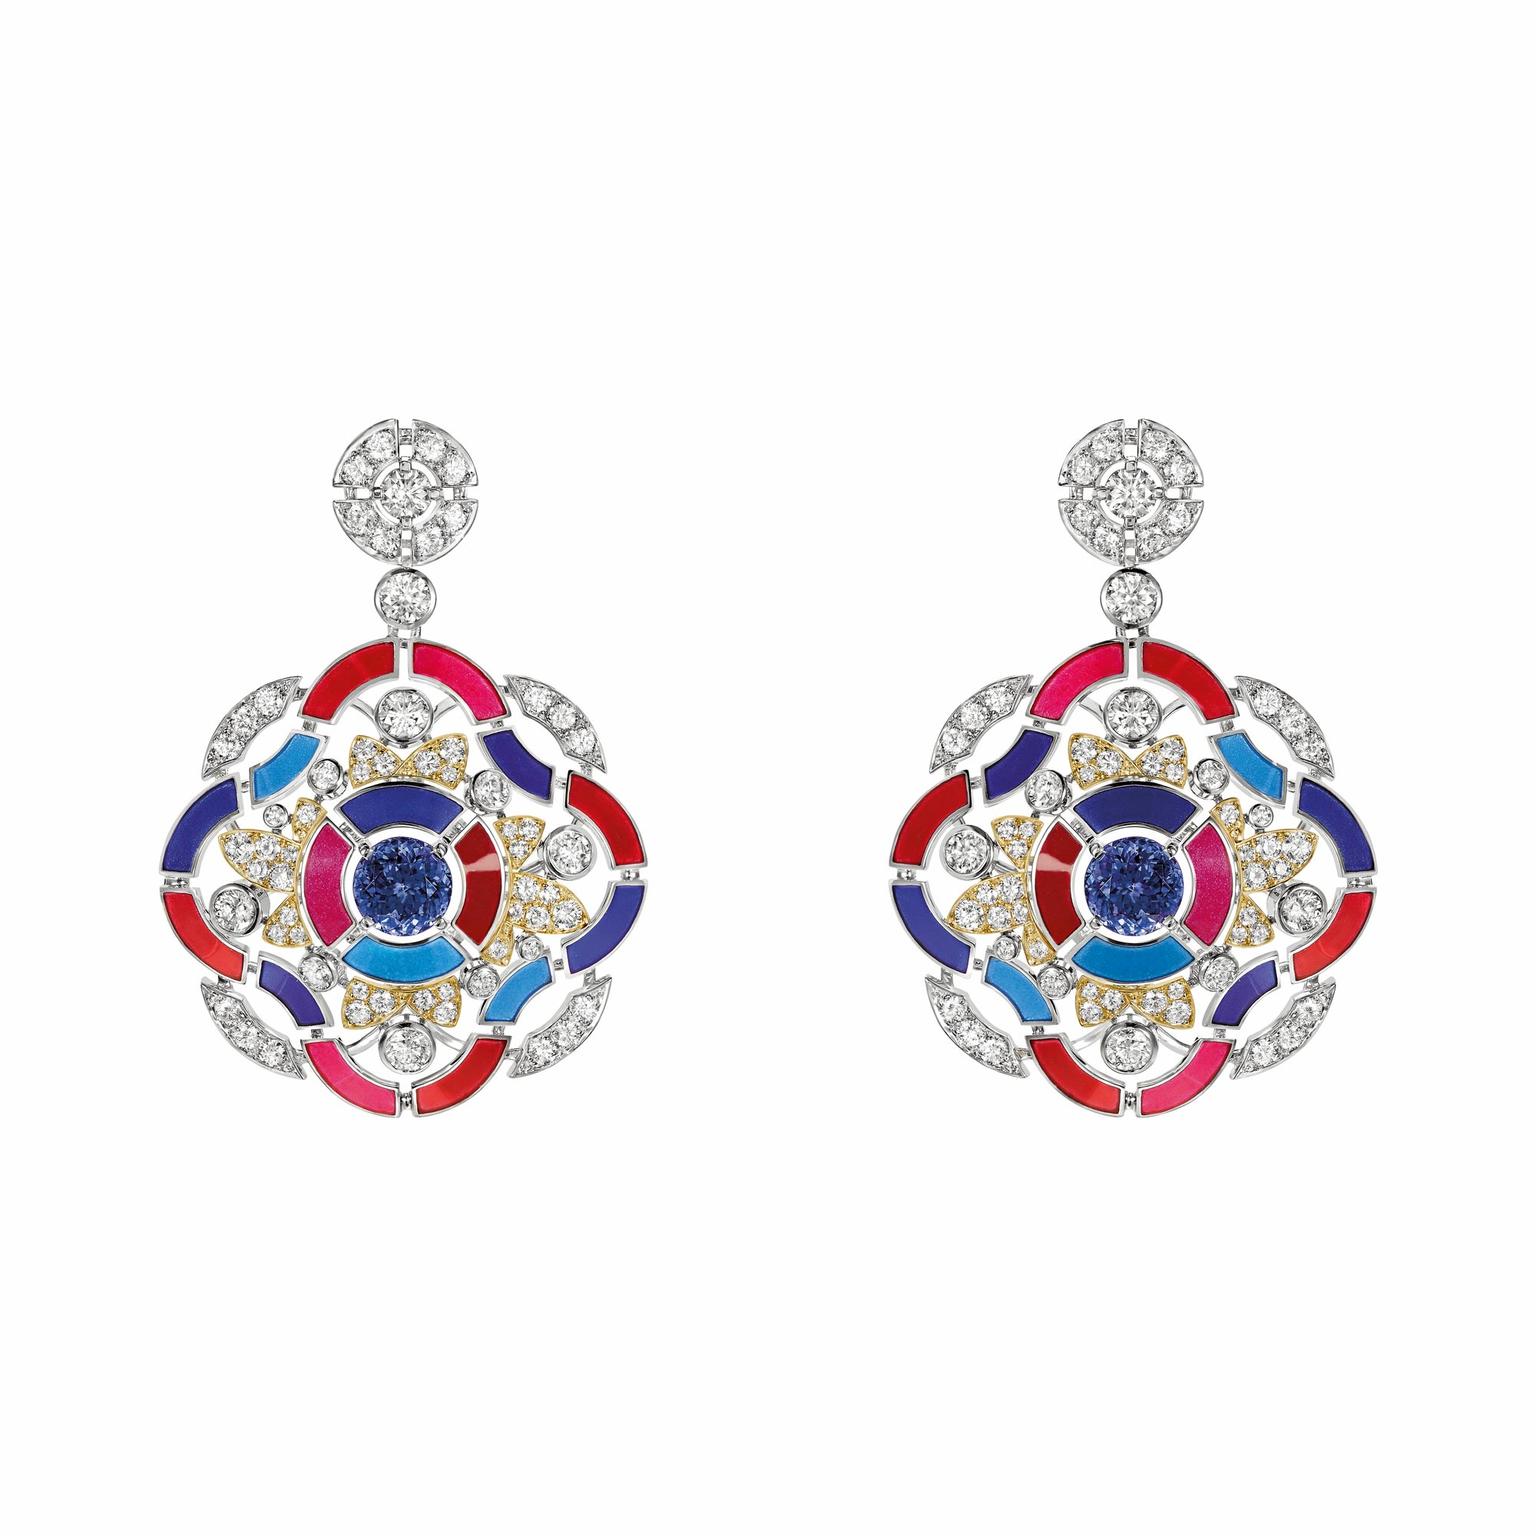 Chanel Talisman collection earrings